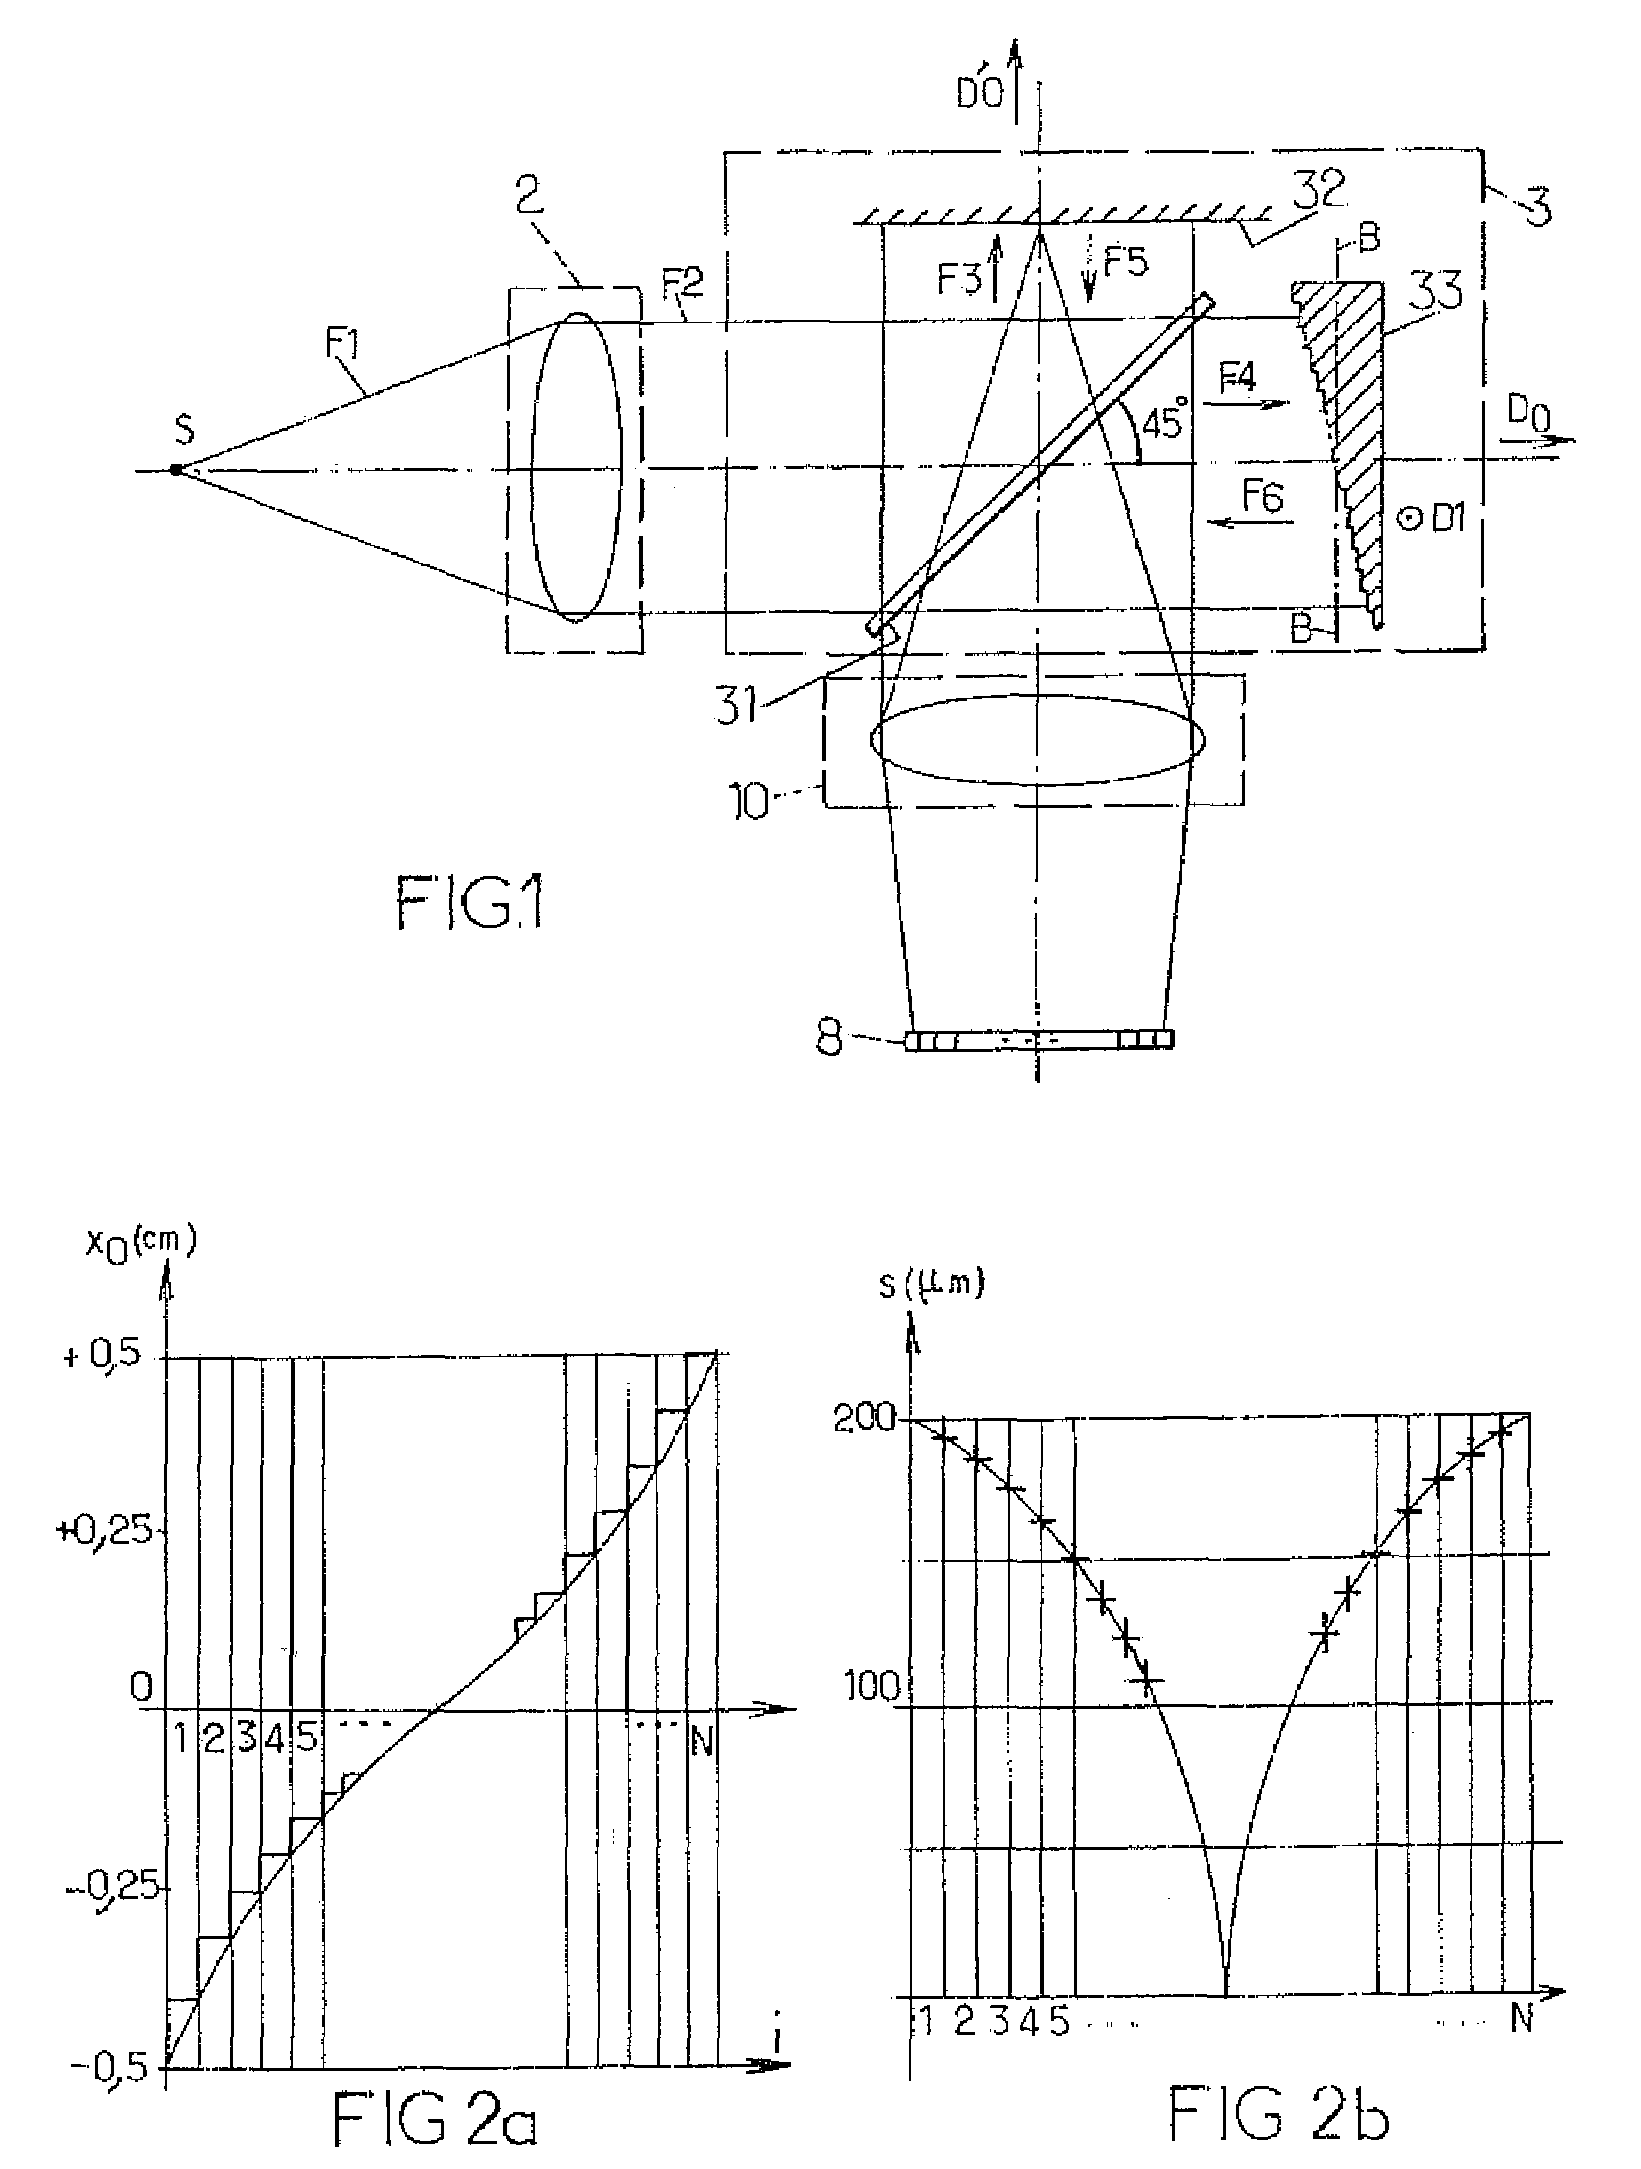 Sampling spectrophotometer comprising an interferometer